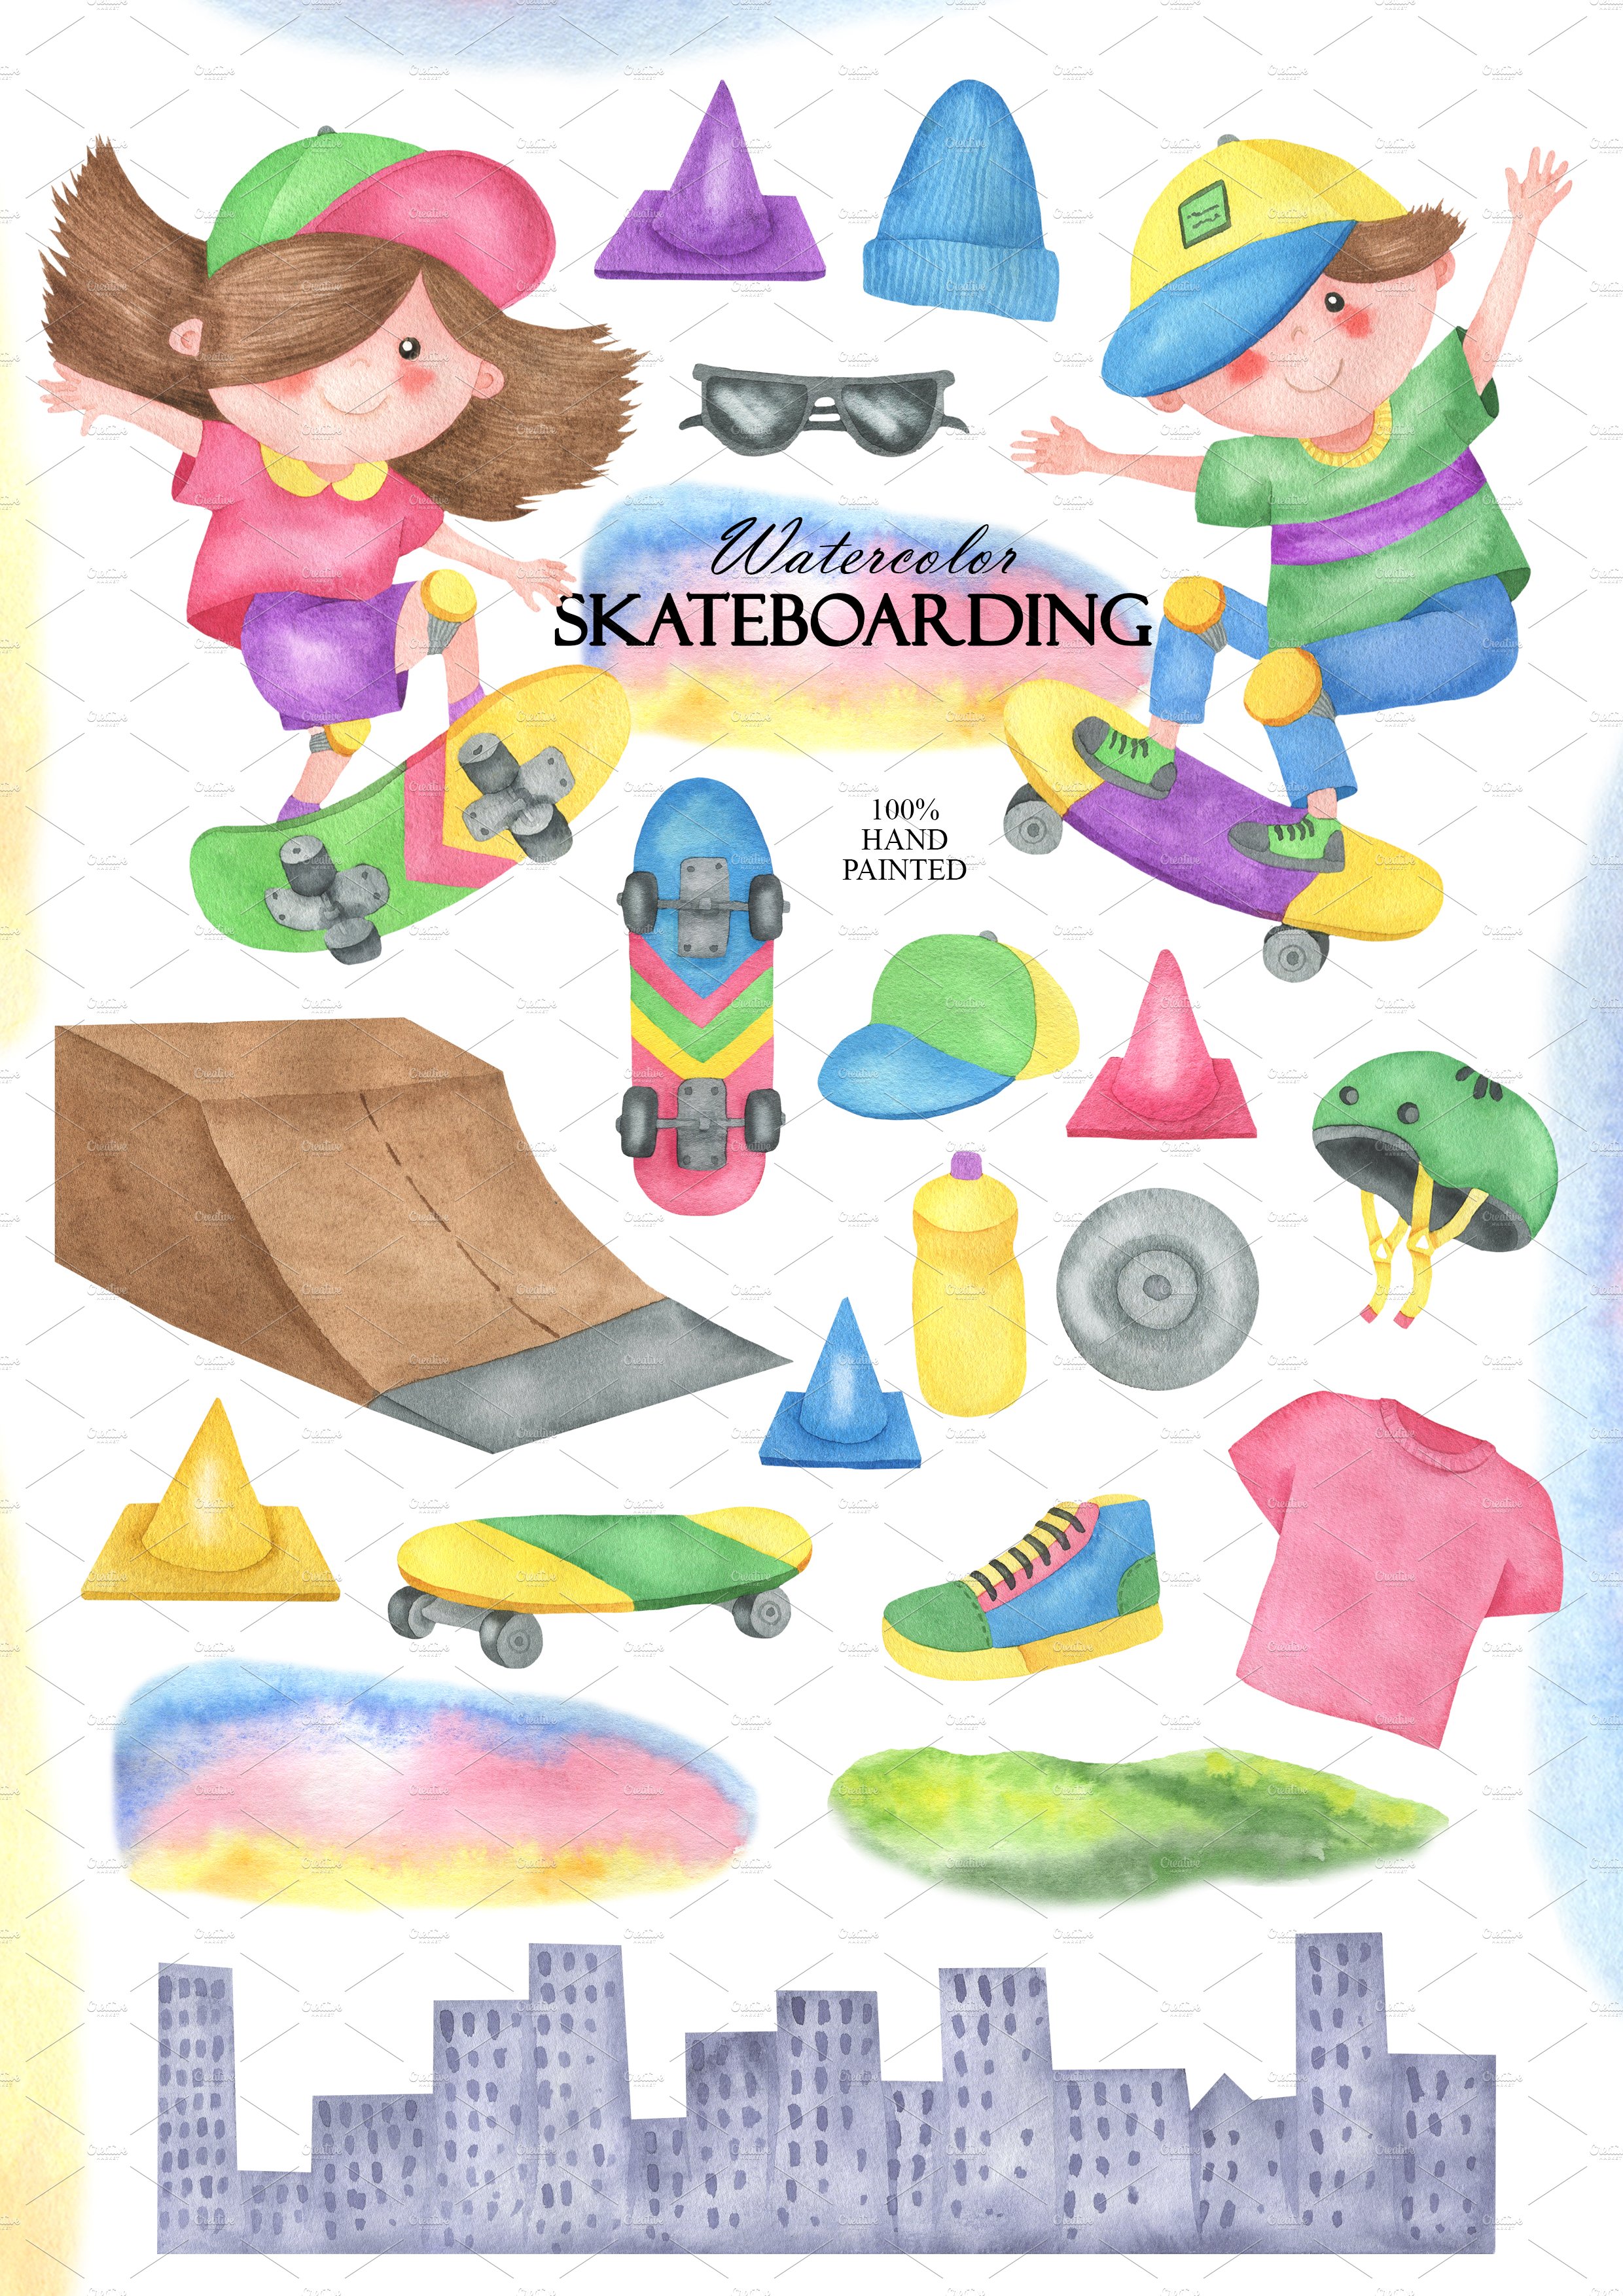 Watercolor Skateboarding preview image.